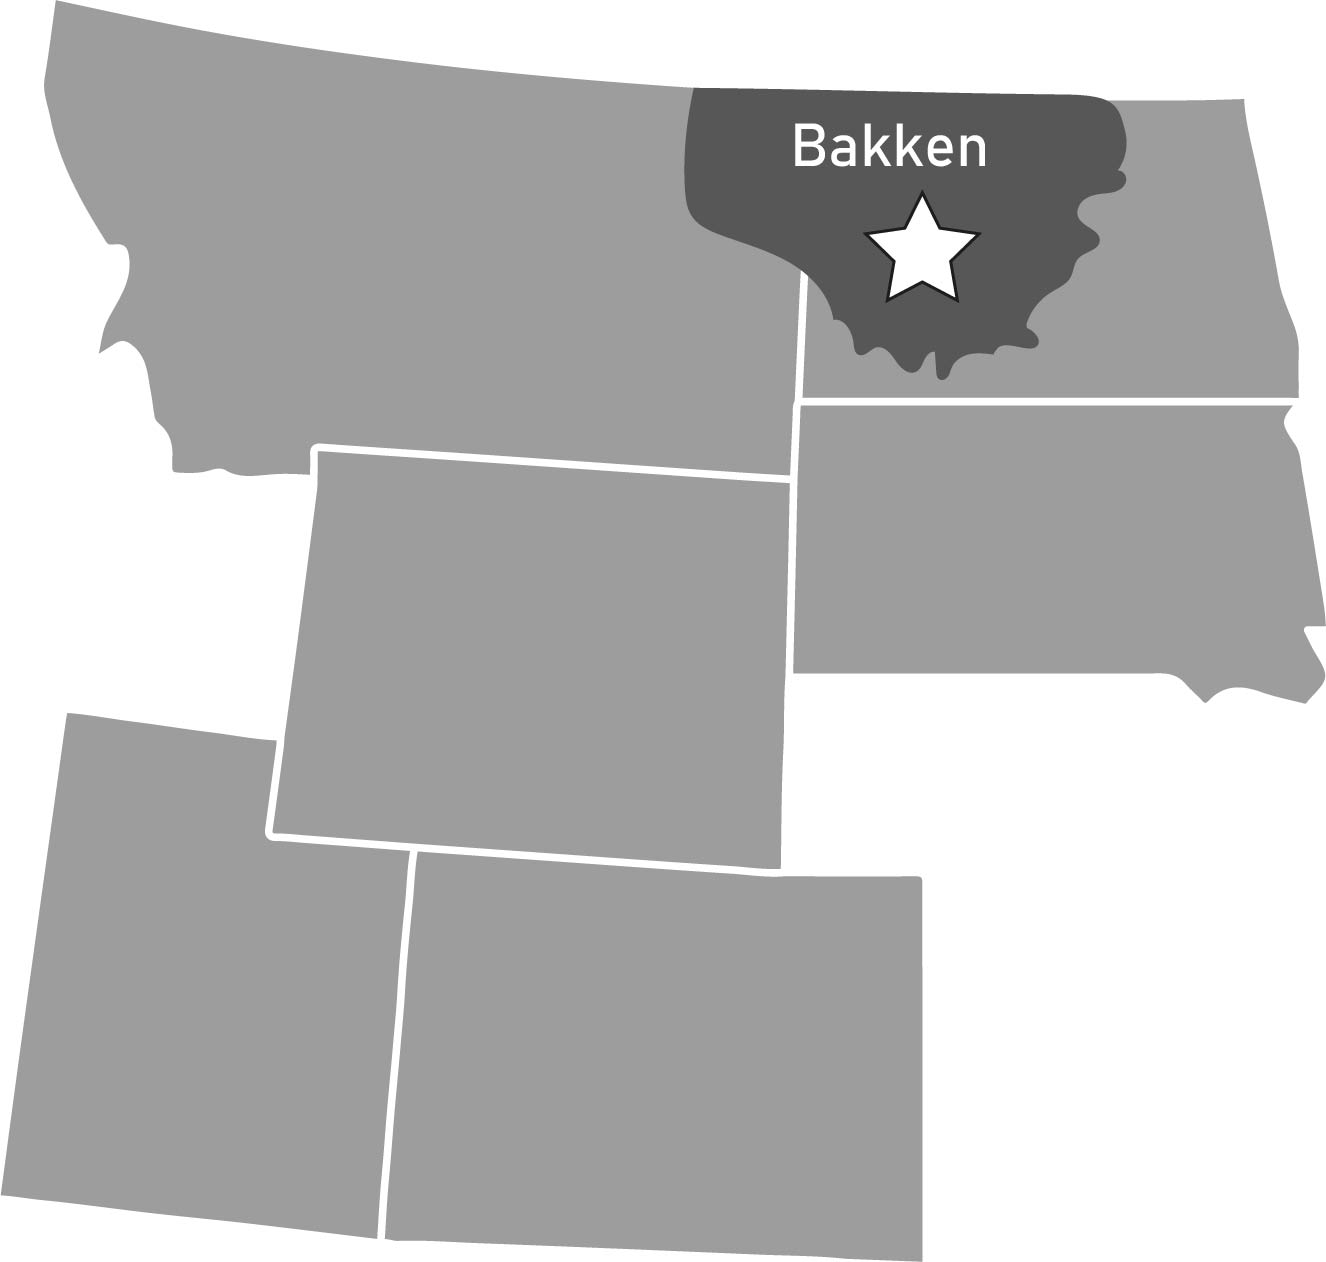 Operations In The Bakken